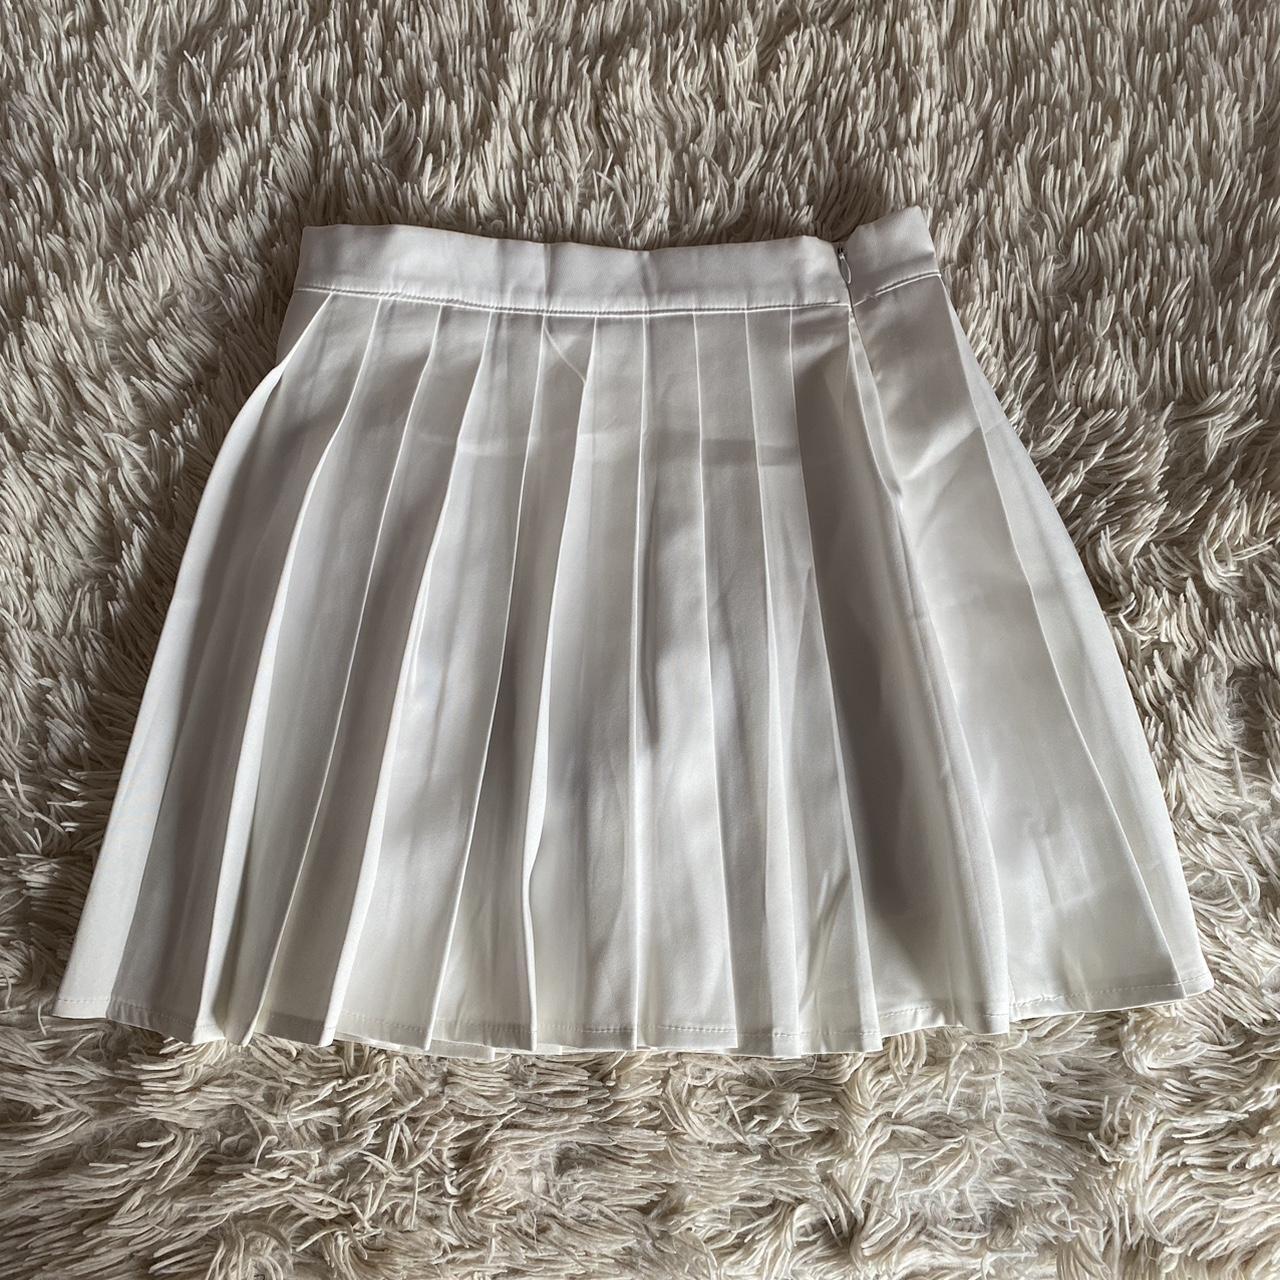 Tennis skirt - Shorts attached - Really good... - Depop